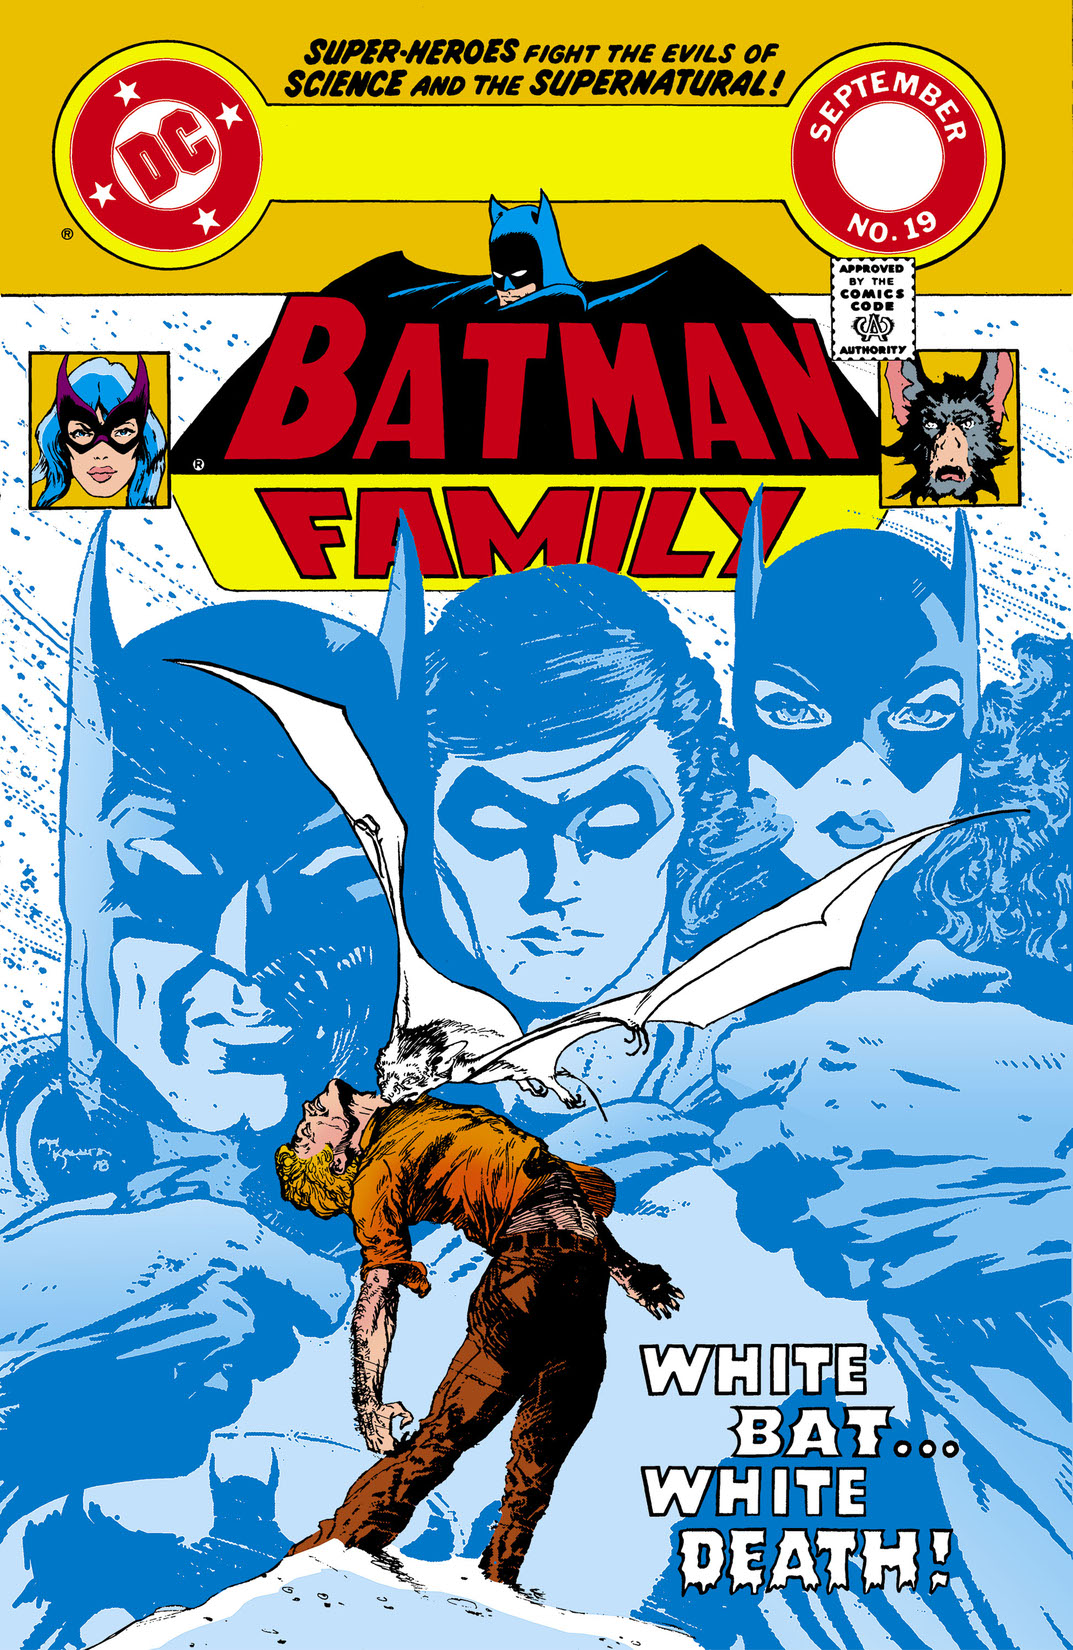 Batman Family #19 preview images